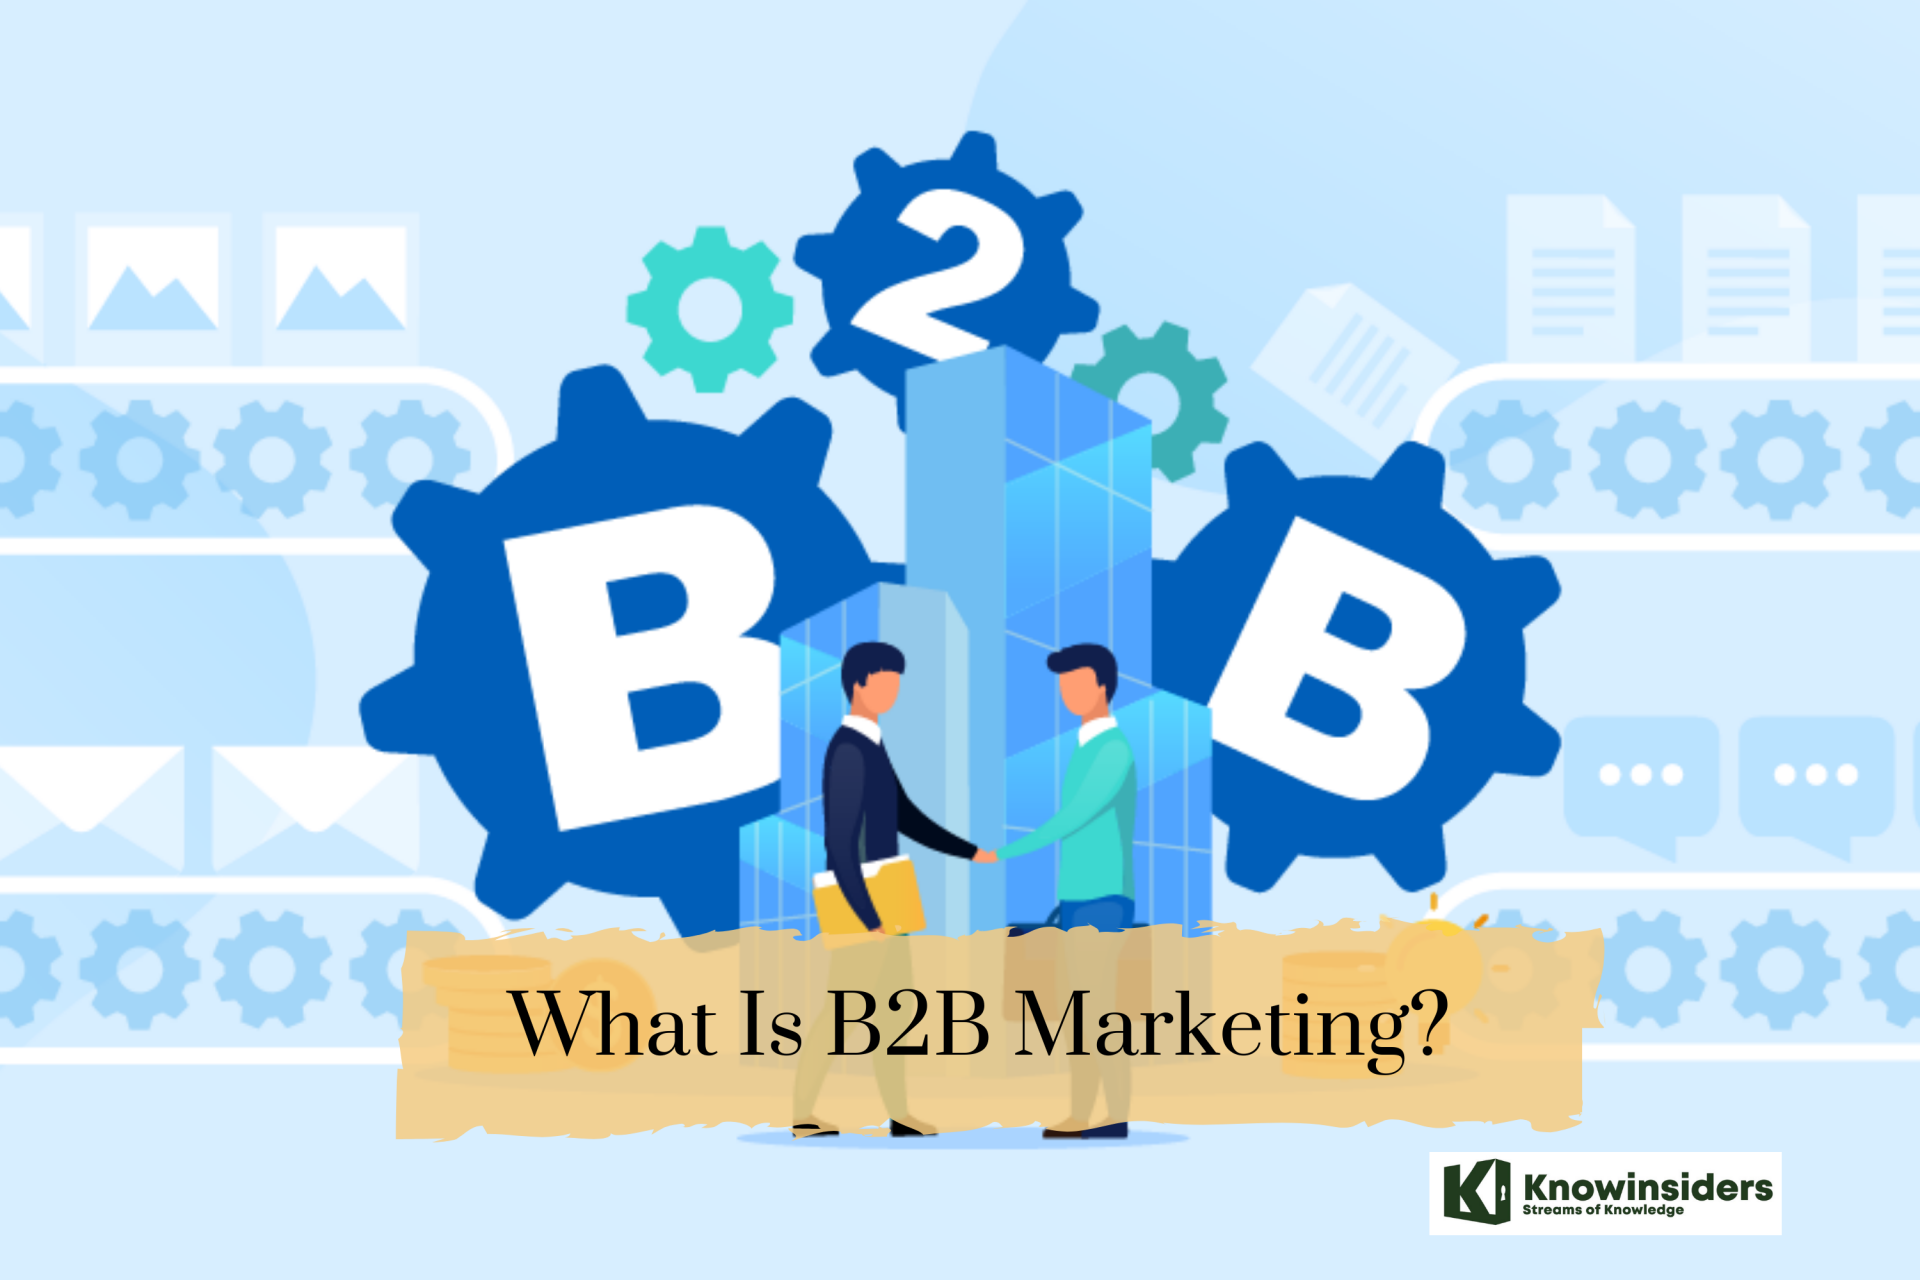 B2B Marketing. Photo: KnowInsiders